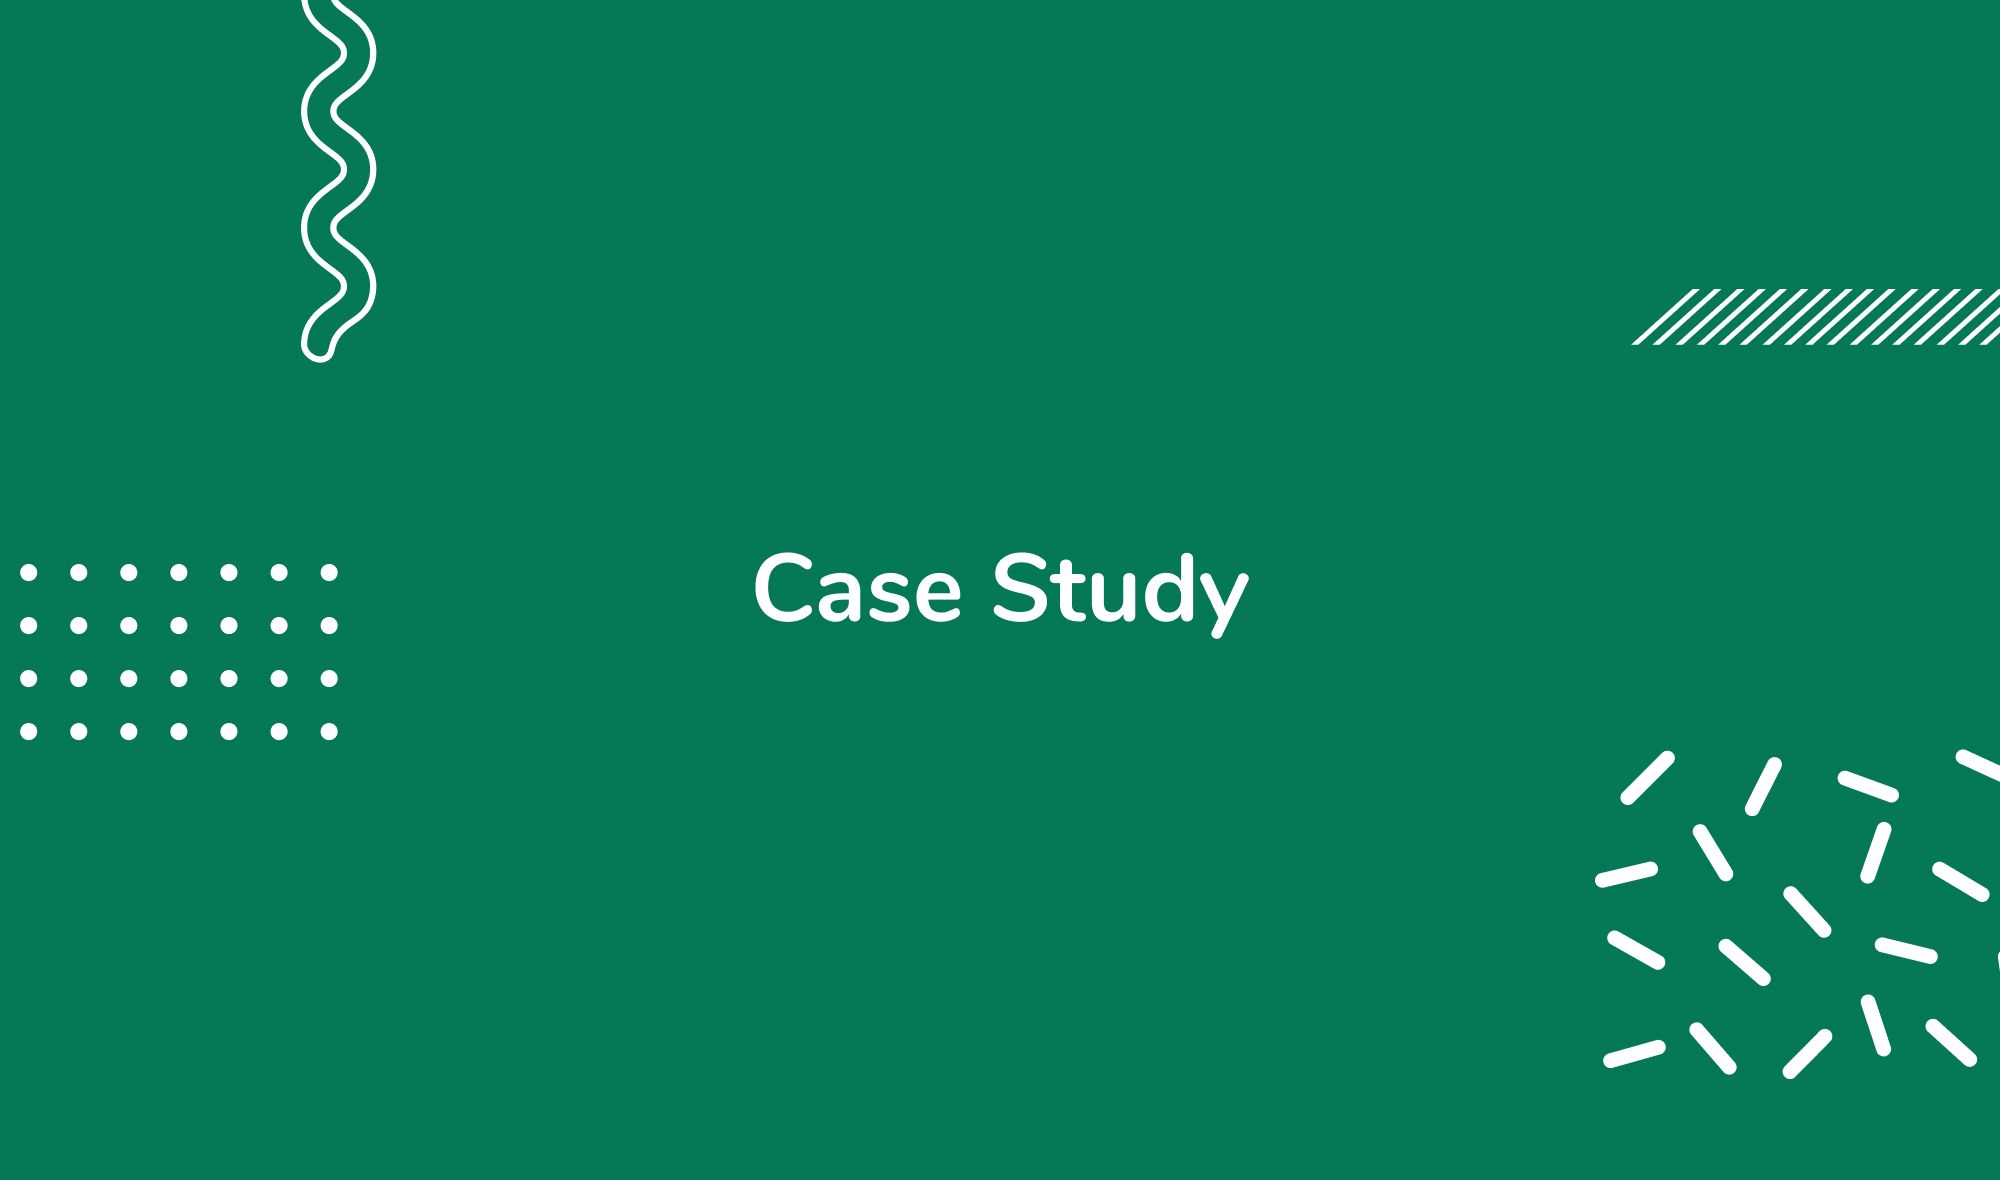 Case Study - The ShoeMoney Story